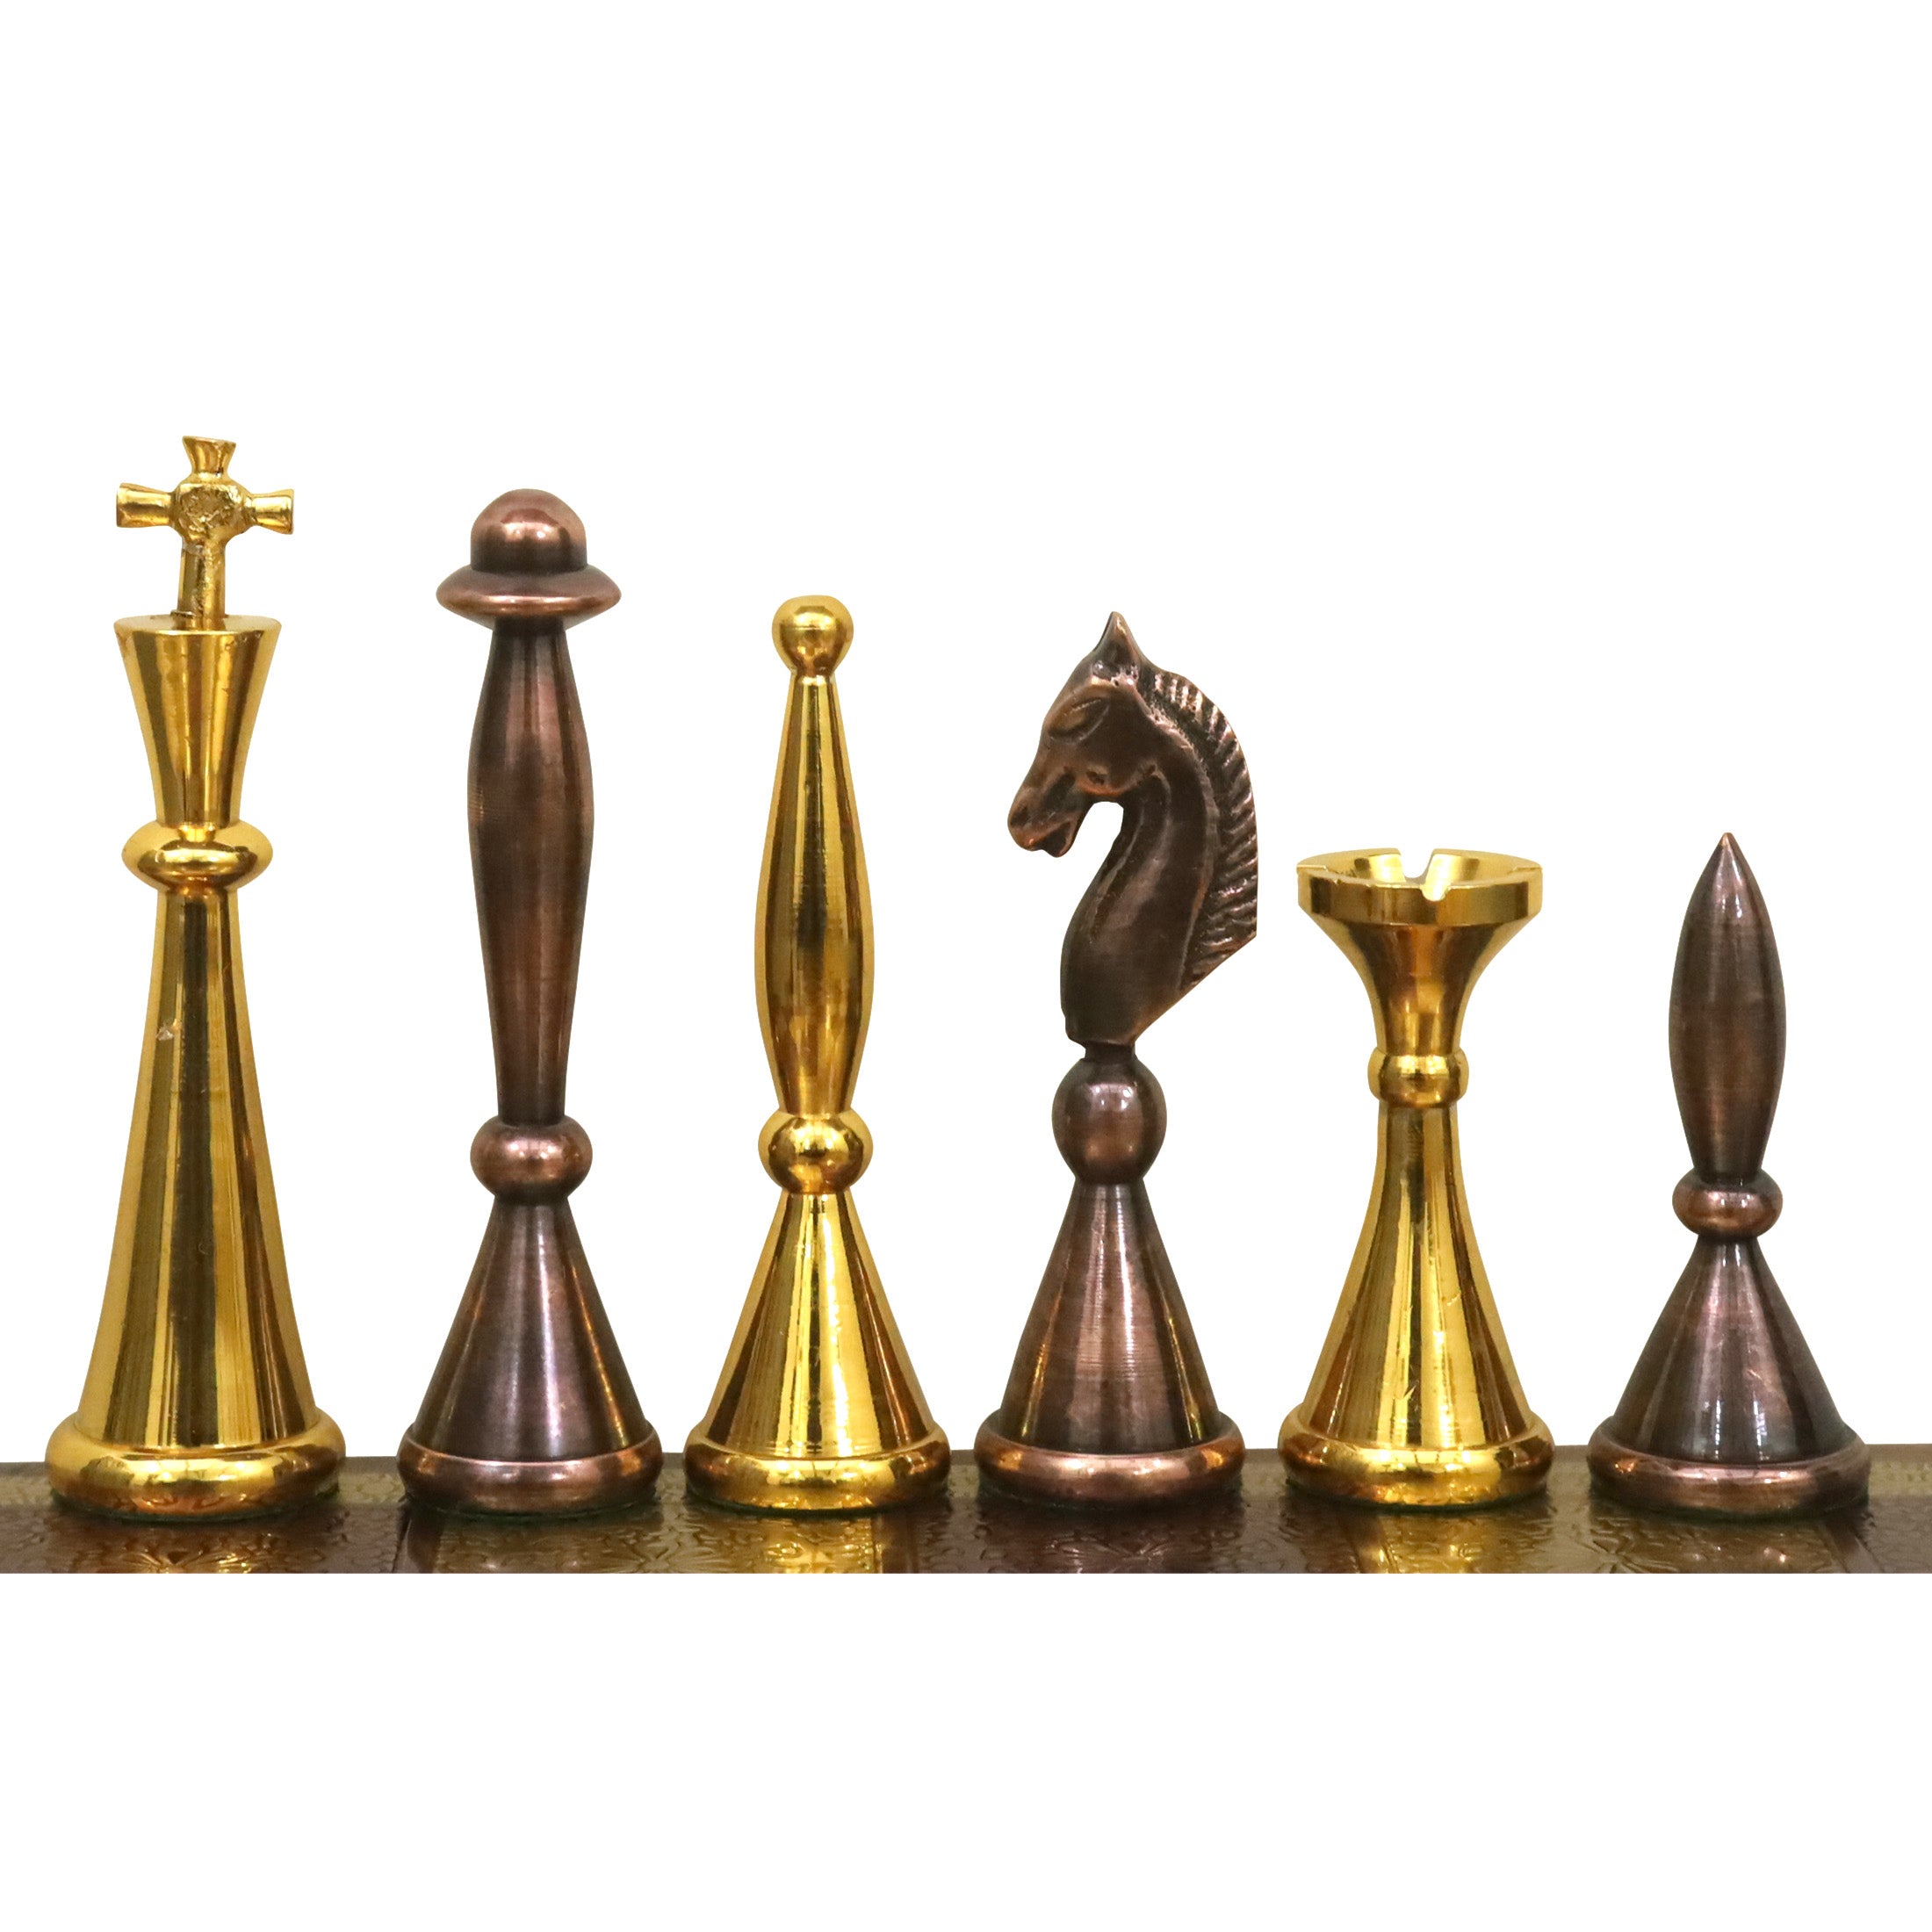 Contemporary Modern Chess Set - ChessBaron Chess Sets USA - Call